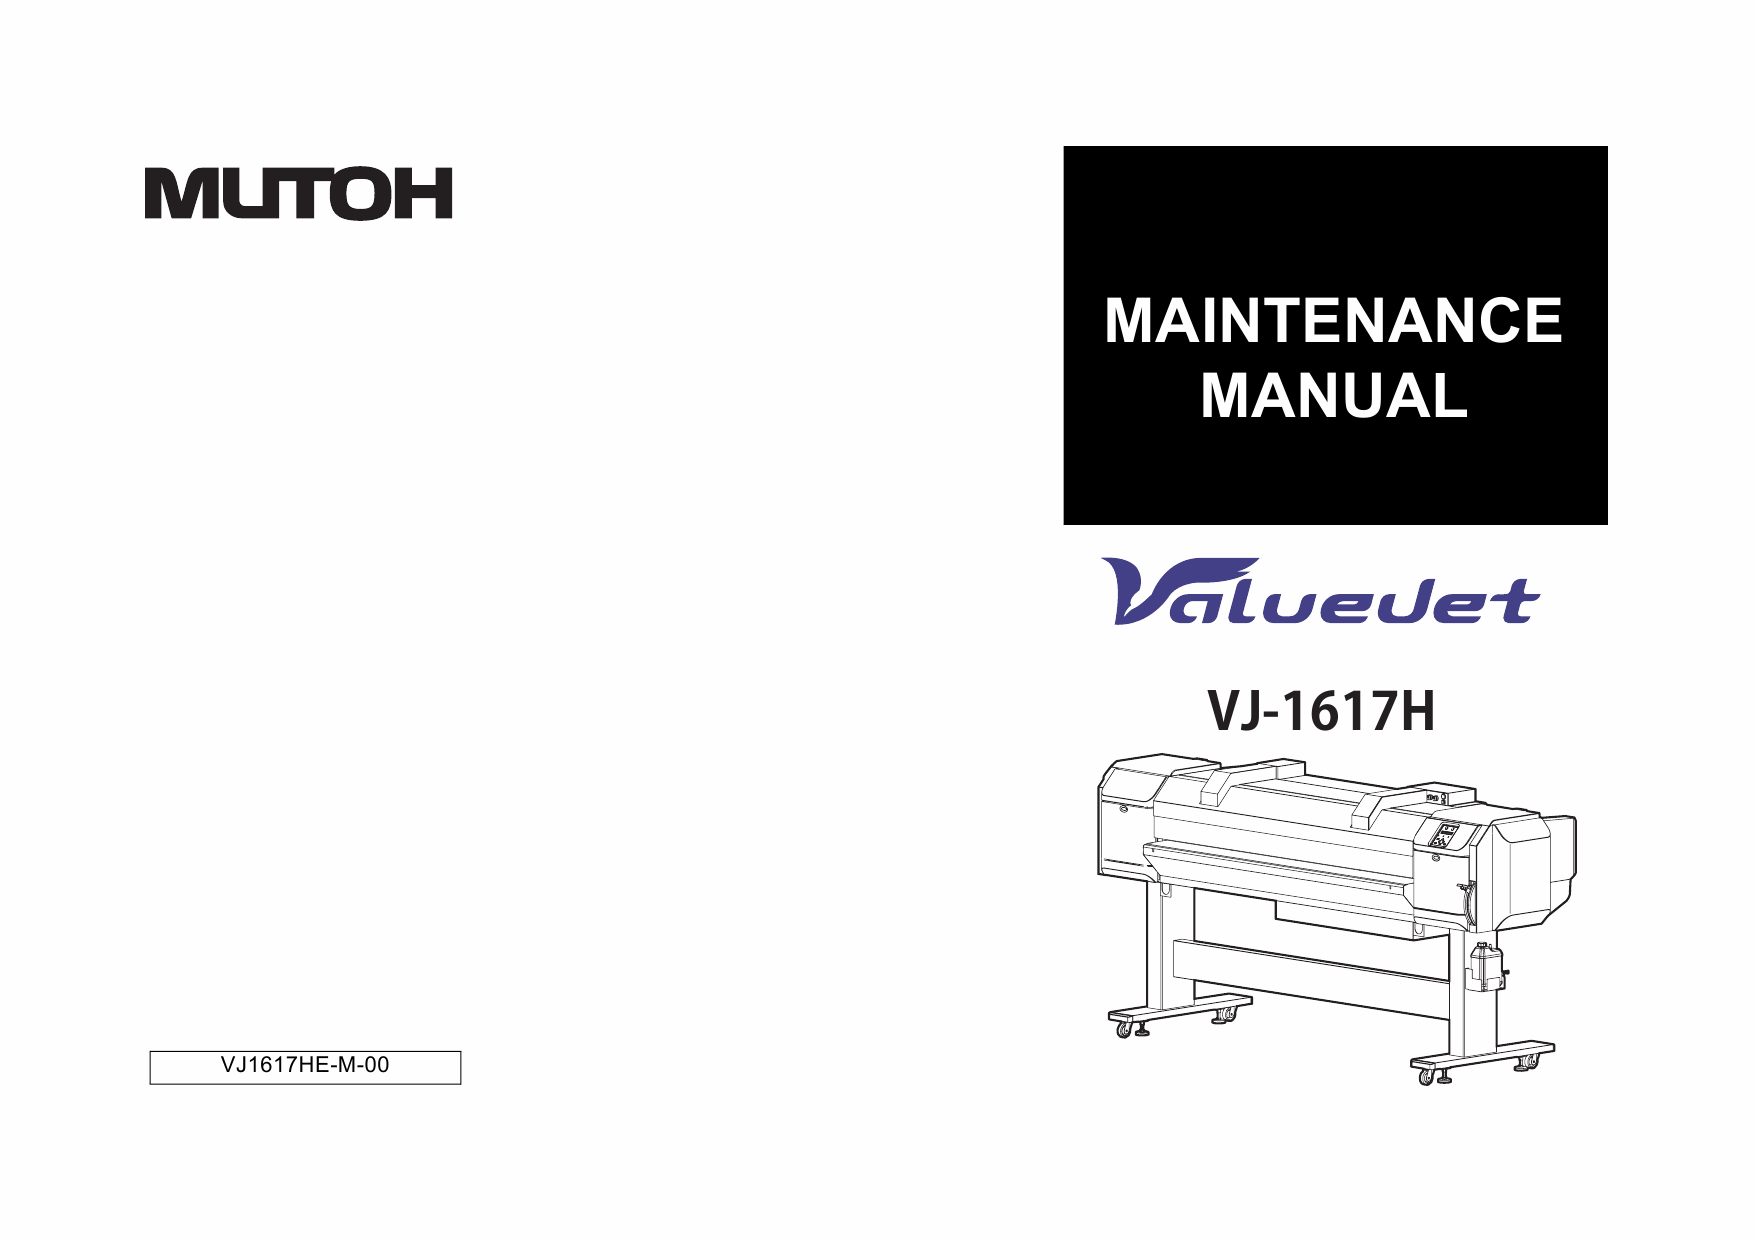 MUTOH ValueJet VJ 1617H MAINTENANCE Service and Parts Manual-1